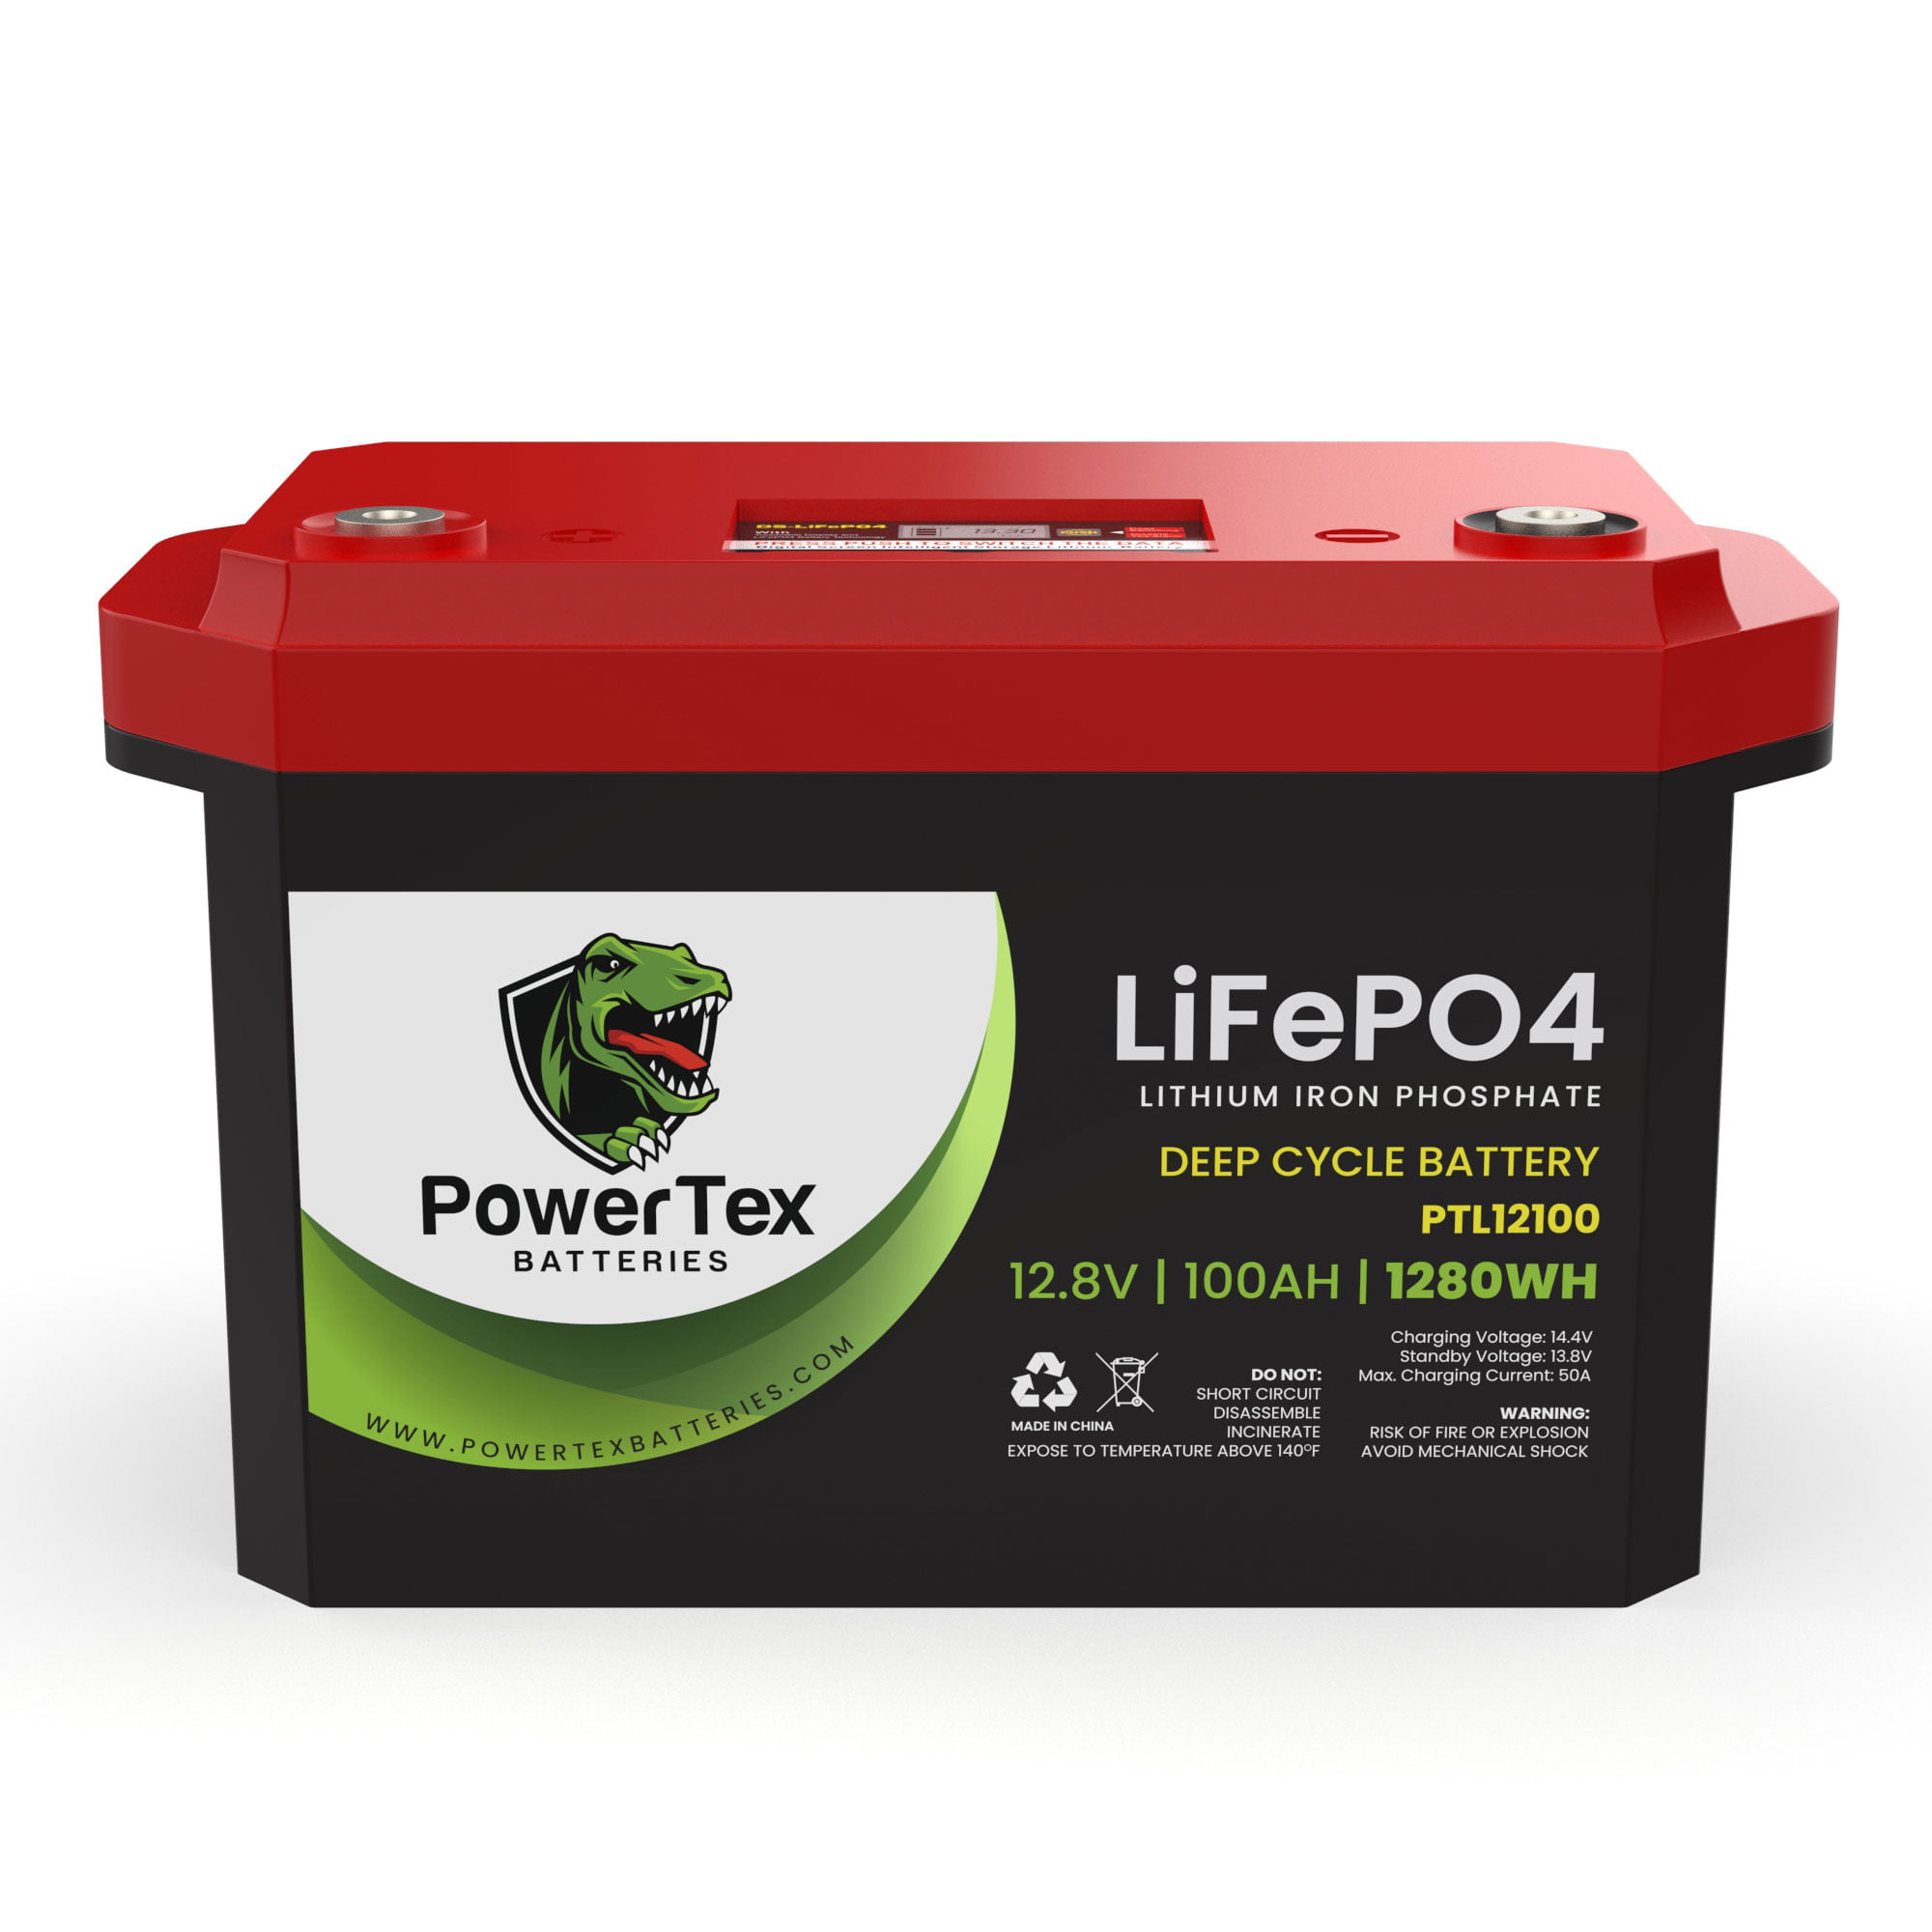 PowerTex Batteries 12V 100Ah 1224Wh Lithium Ion LiFePO4 Deep Cycle